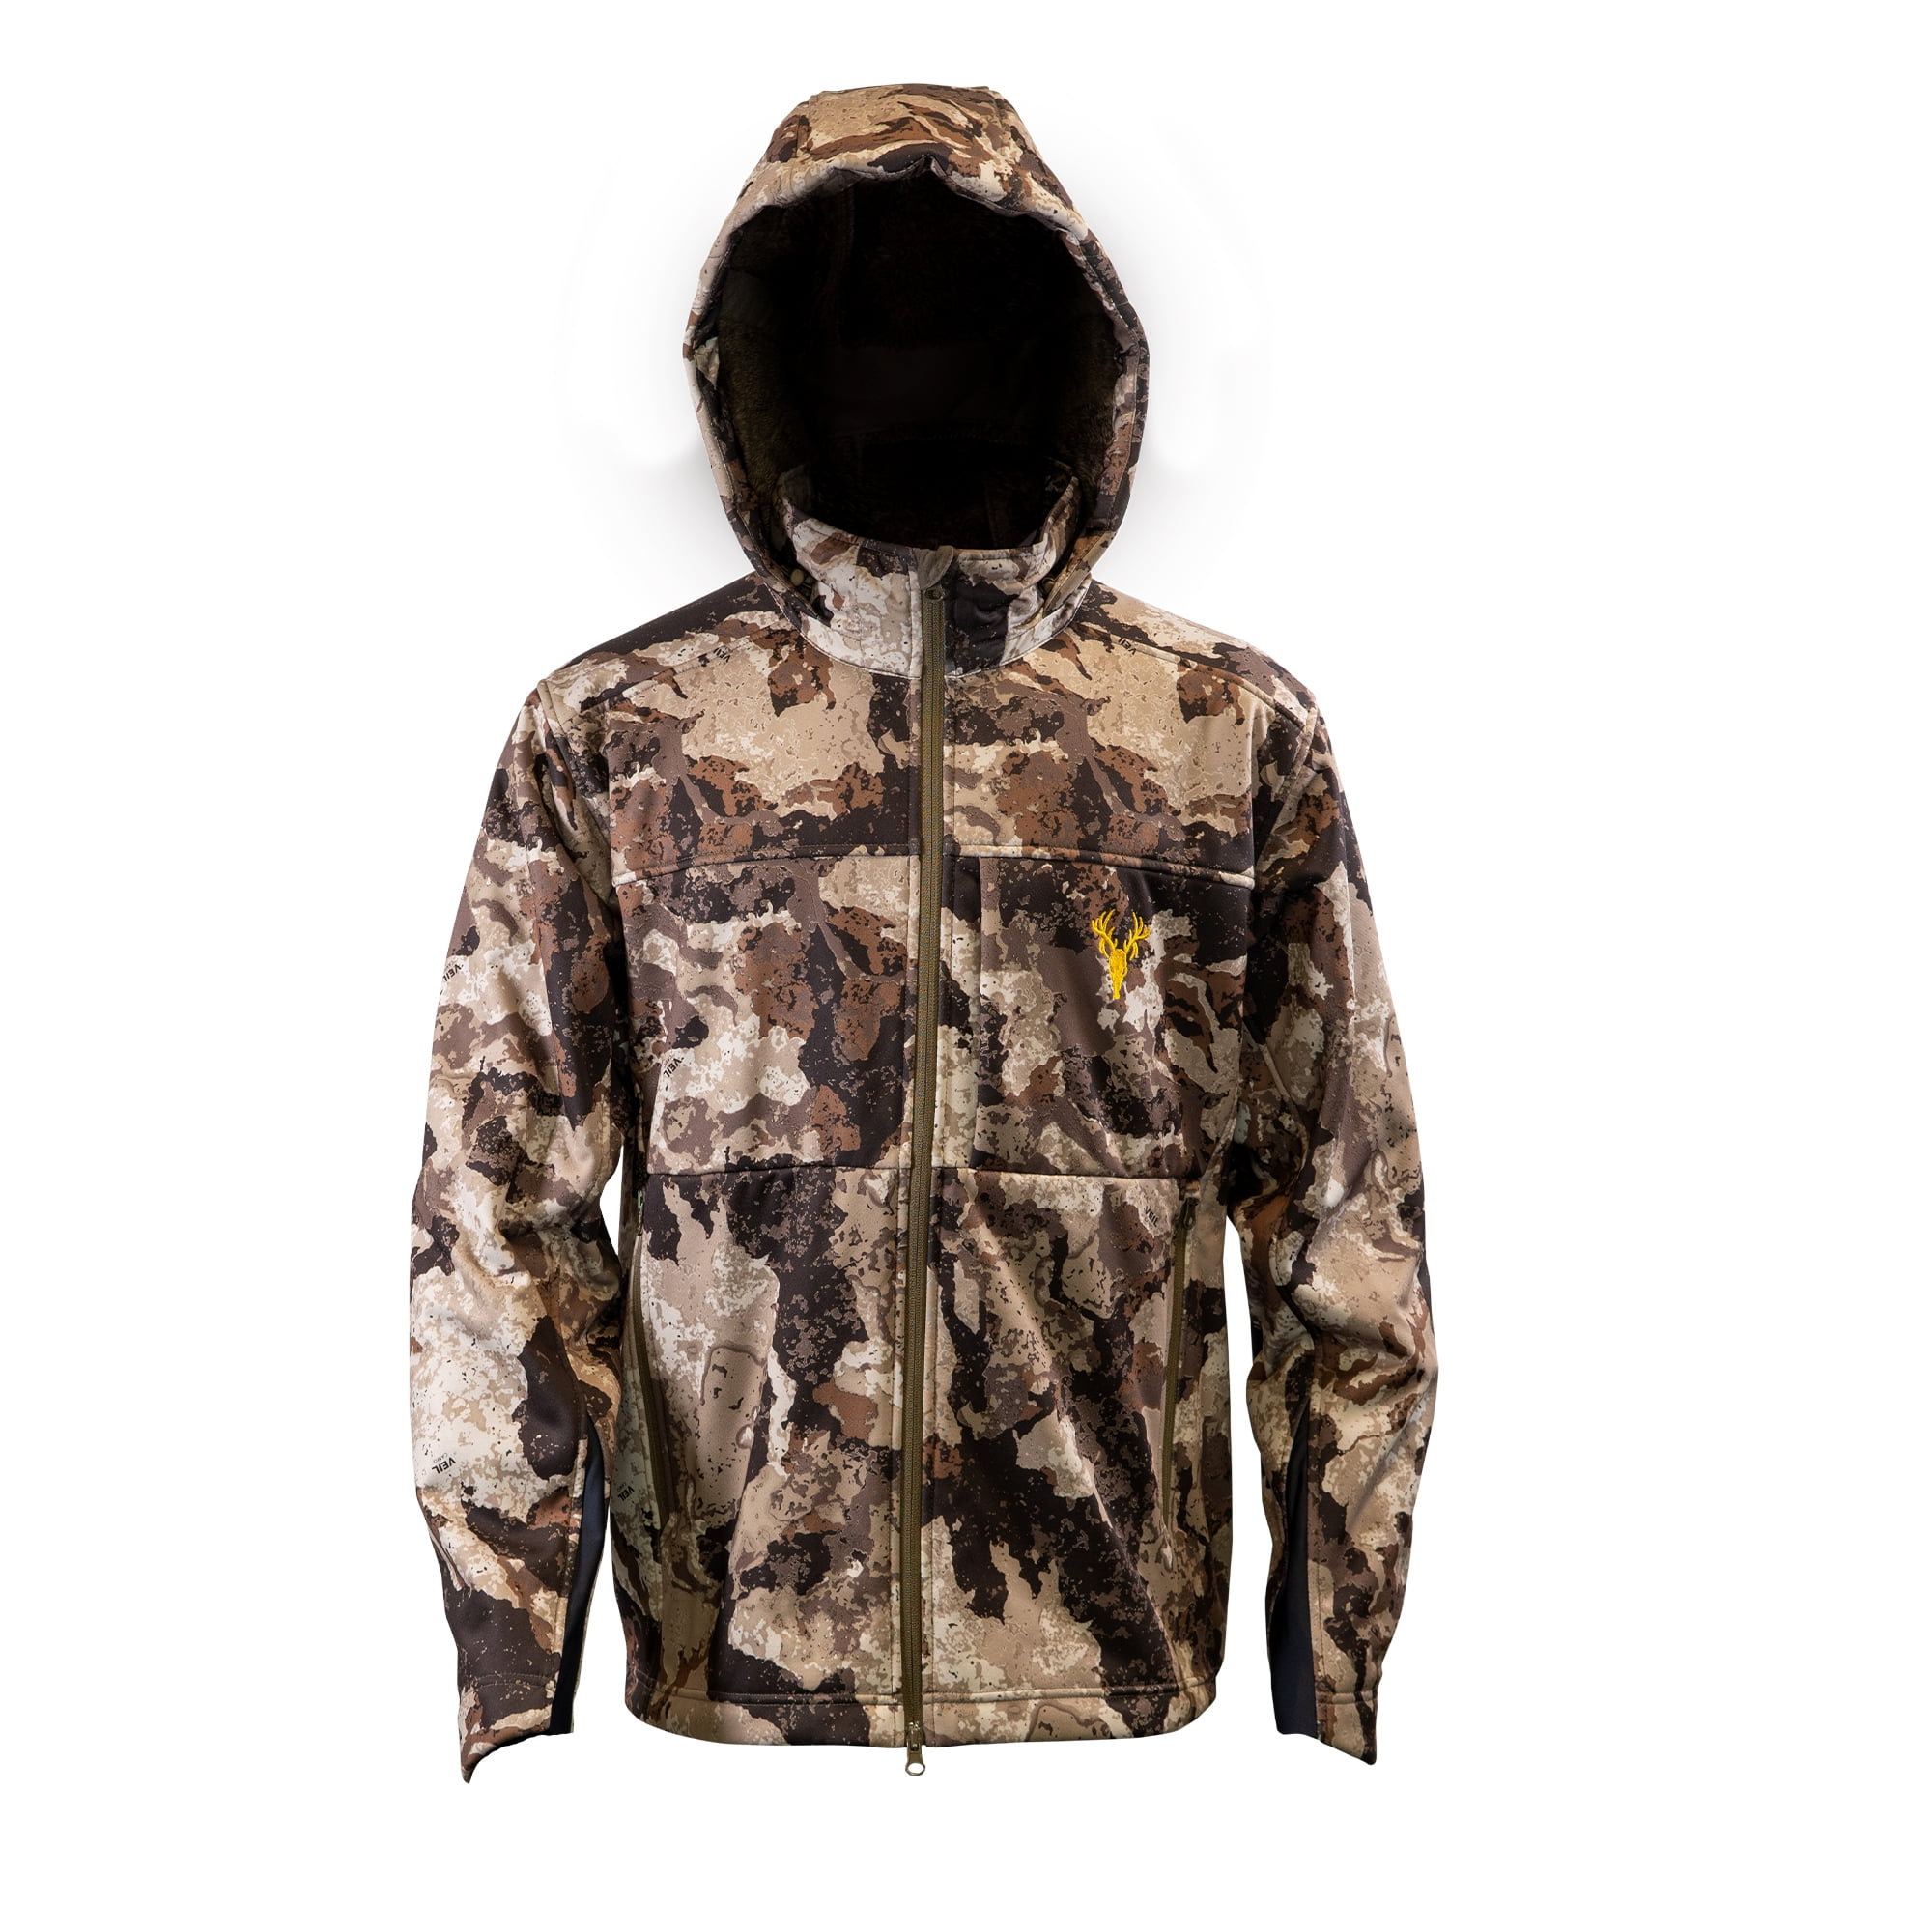 HOT SHOT Men’s Camo Softshell Jacket – Realtree Edge Hunting Outdoor  Apparel, Medium